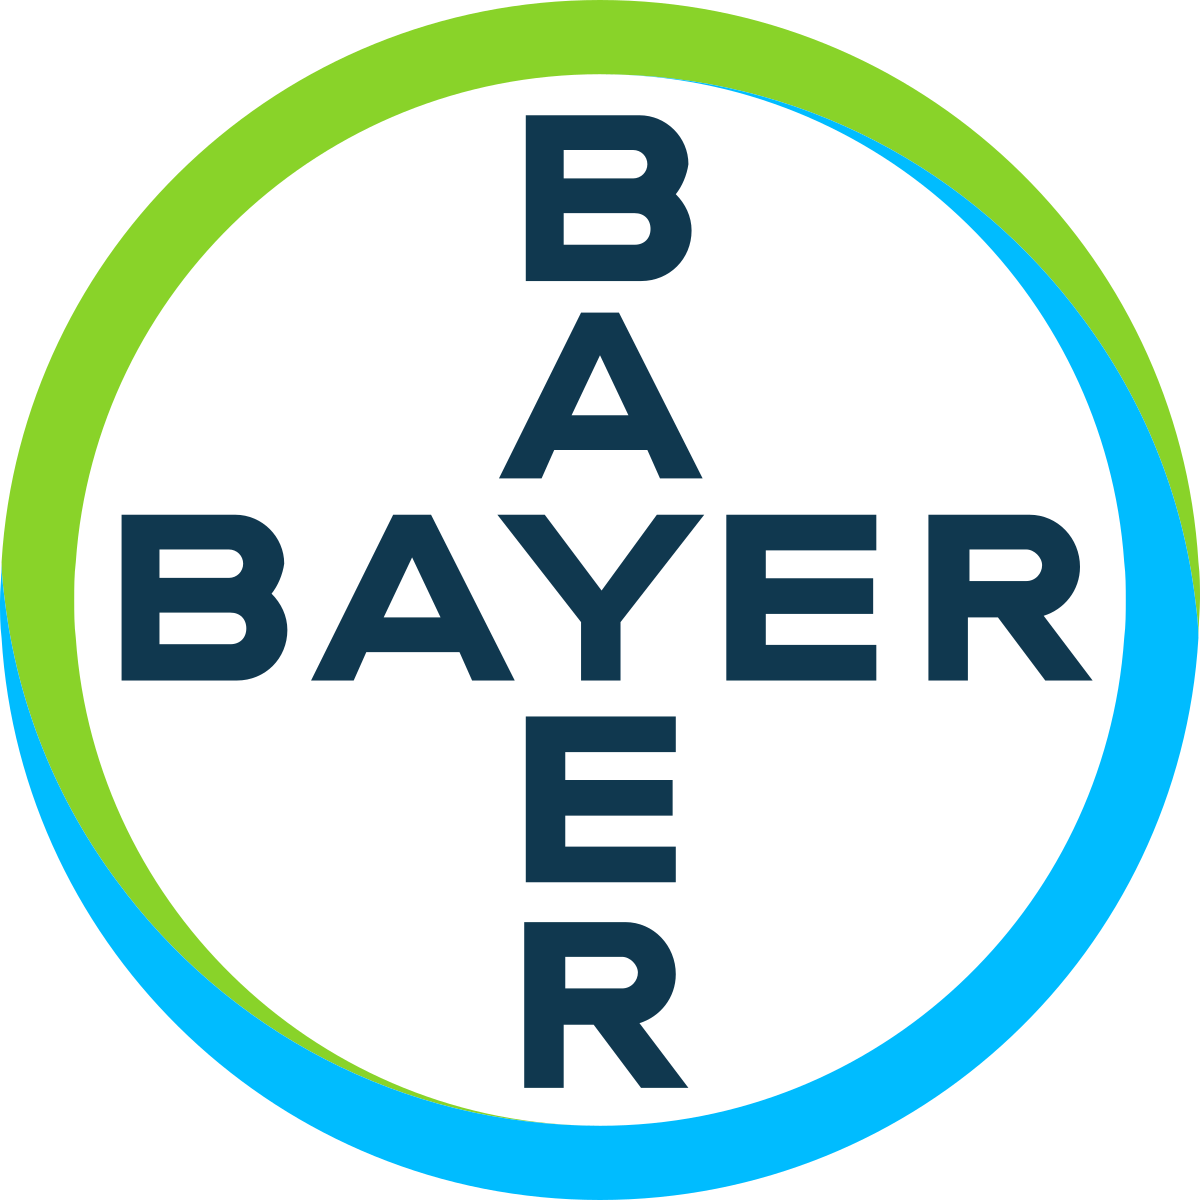 Kundenlogo Bayer blue und green - Full service Digital Agency SUNZINET